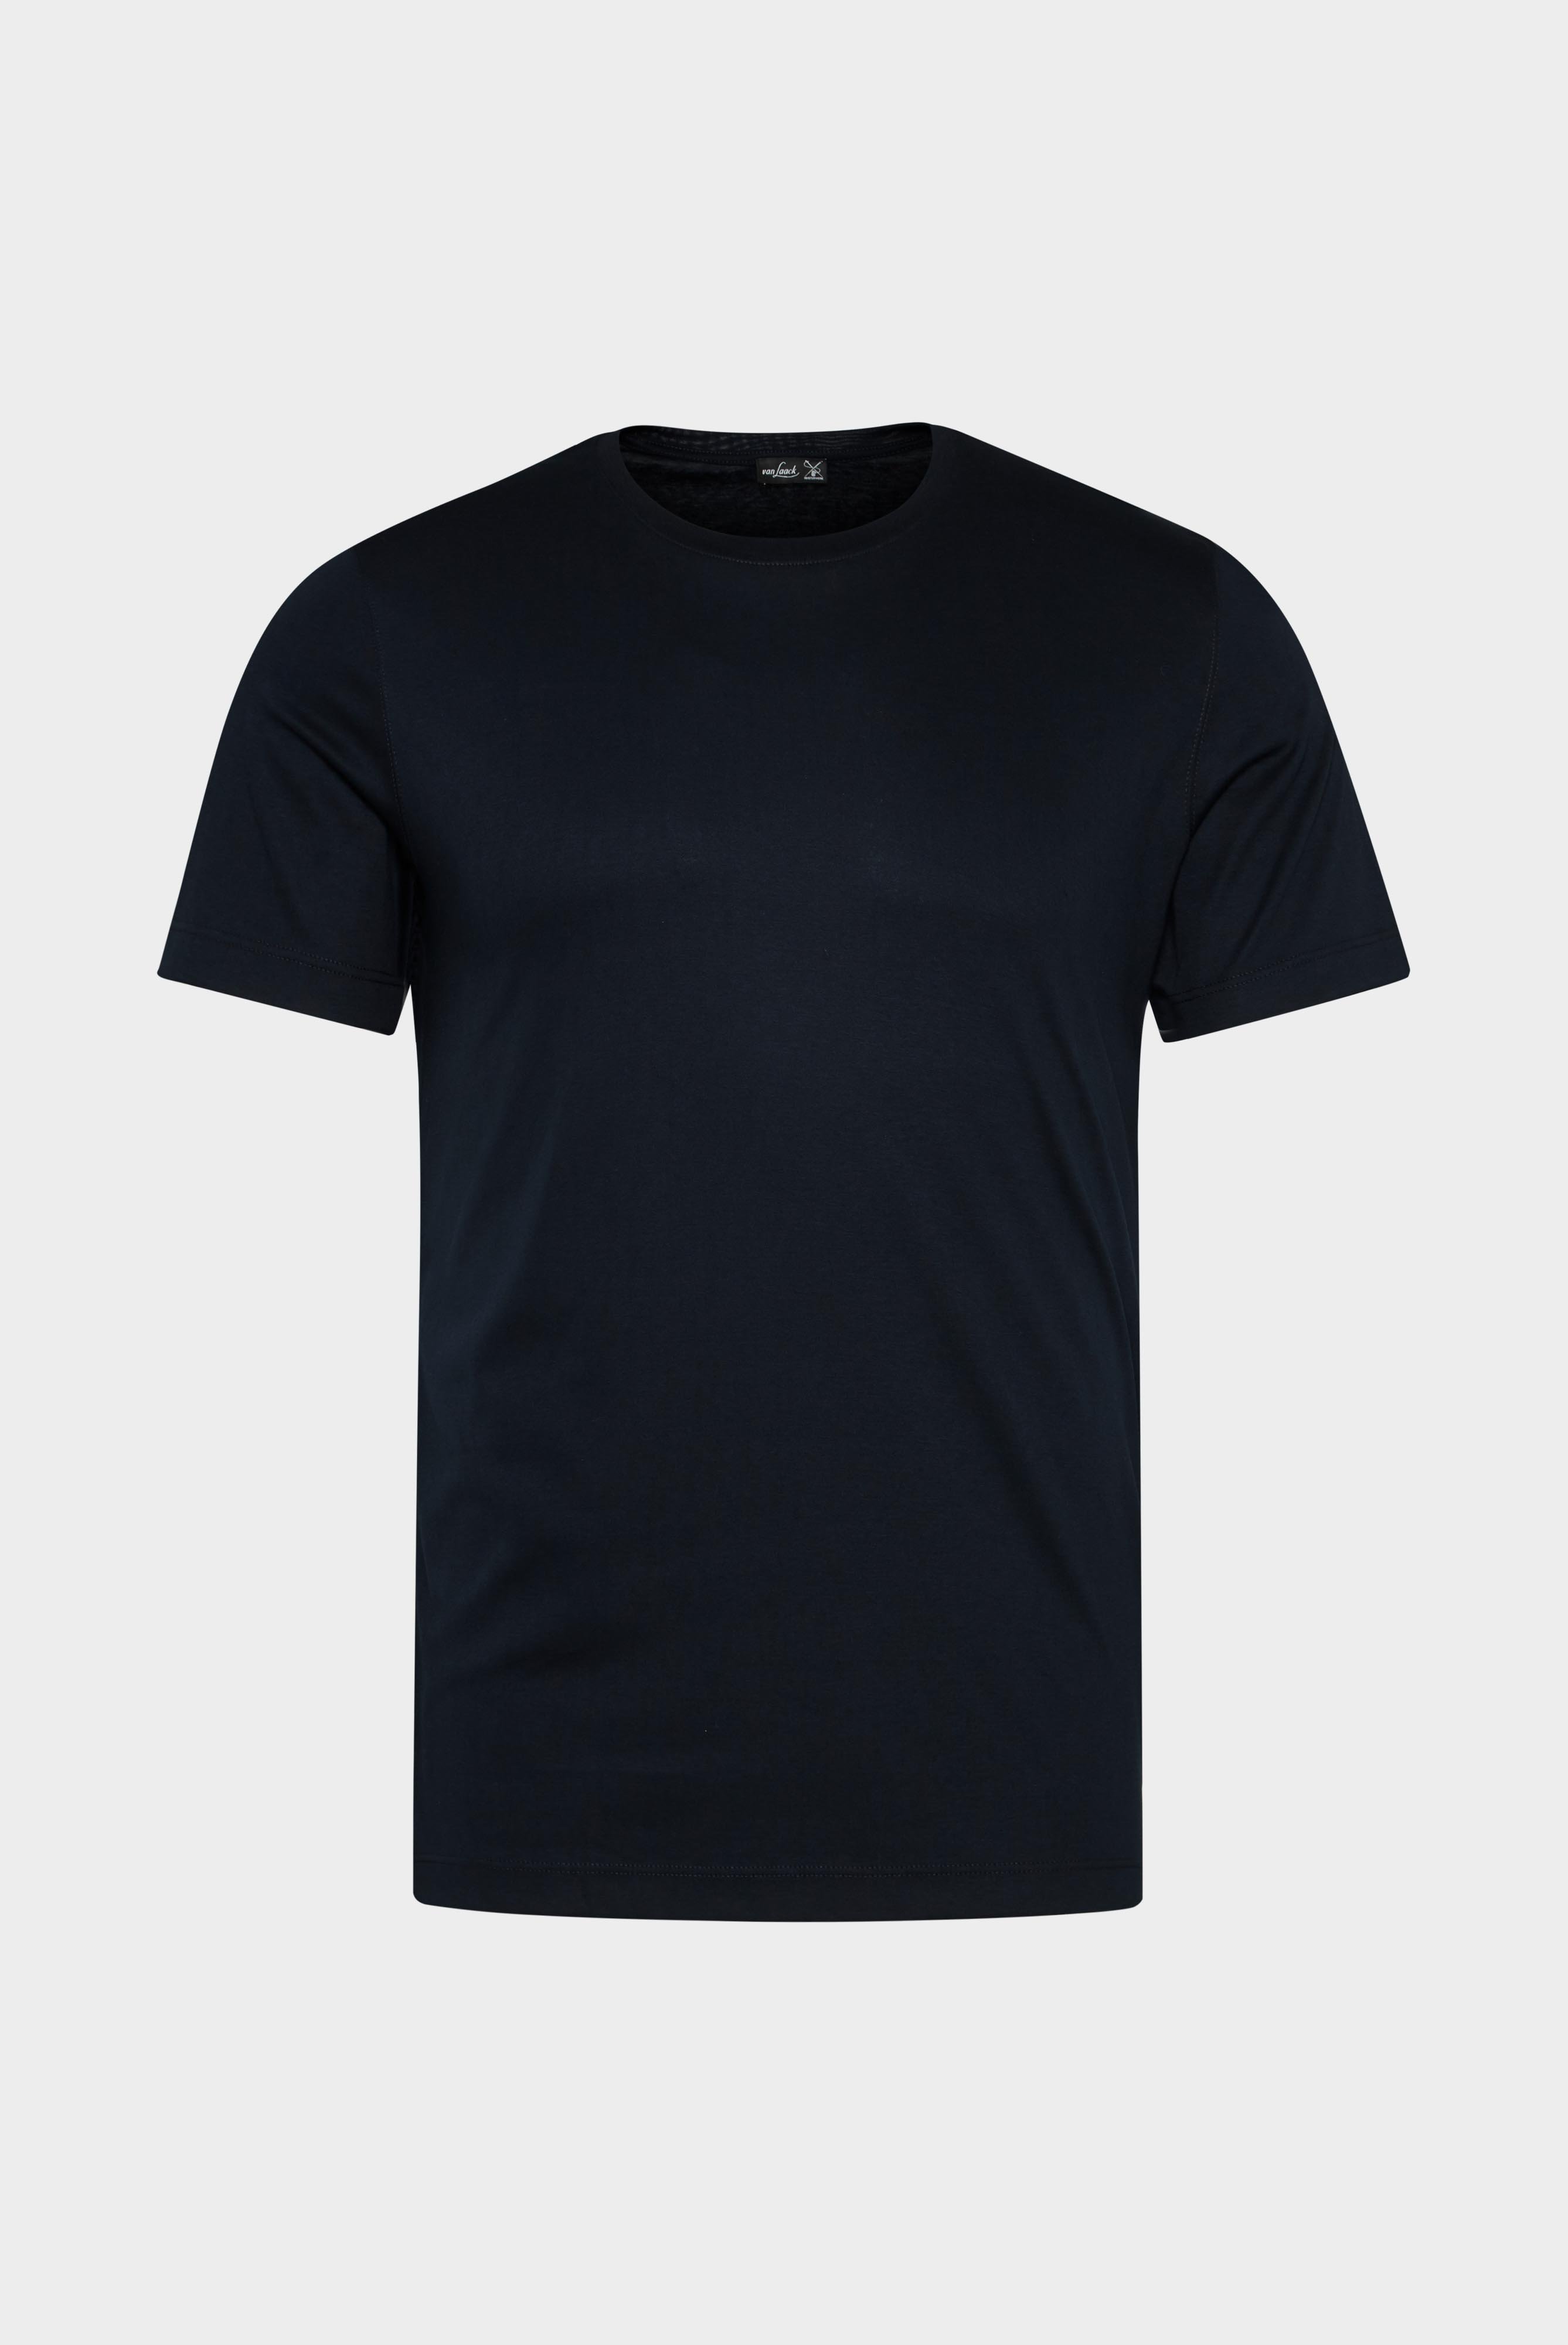 T-Shirts+Rundhals Jersey T-Shirt Slim Fit+20.1717.UX.180031.790.XL